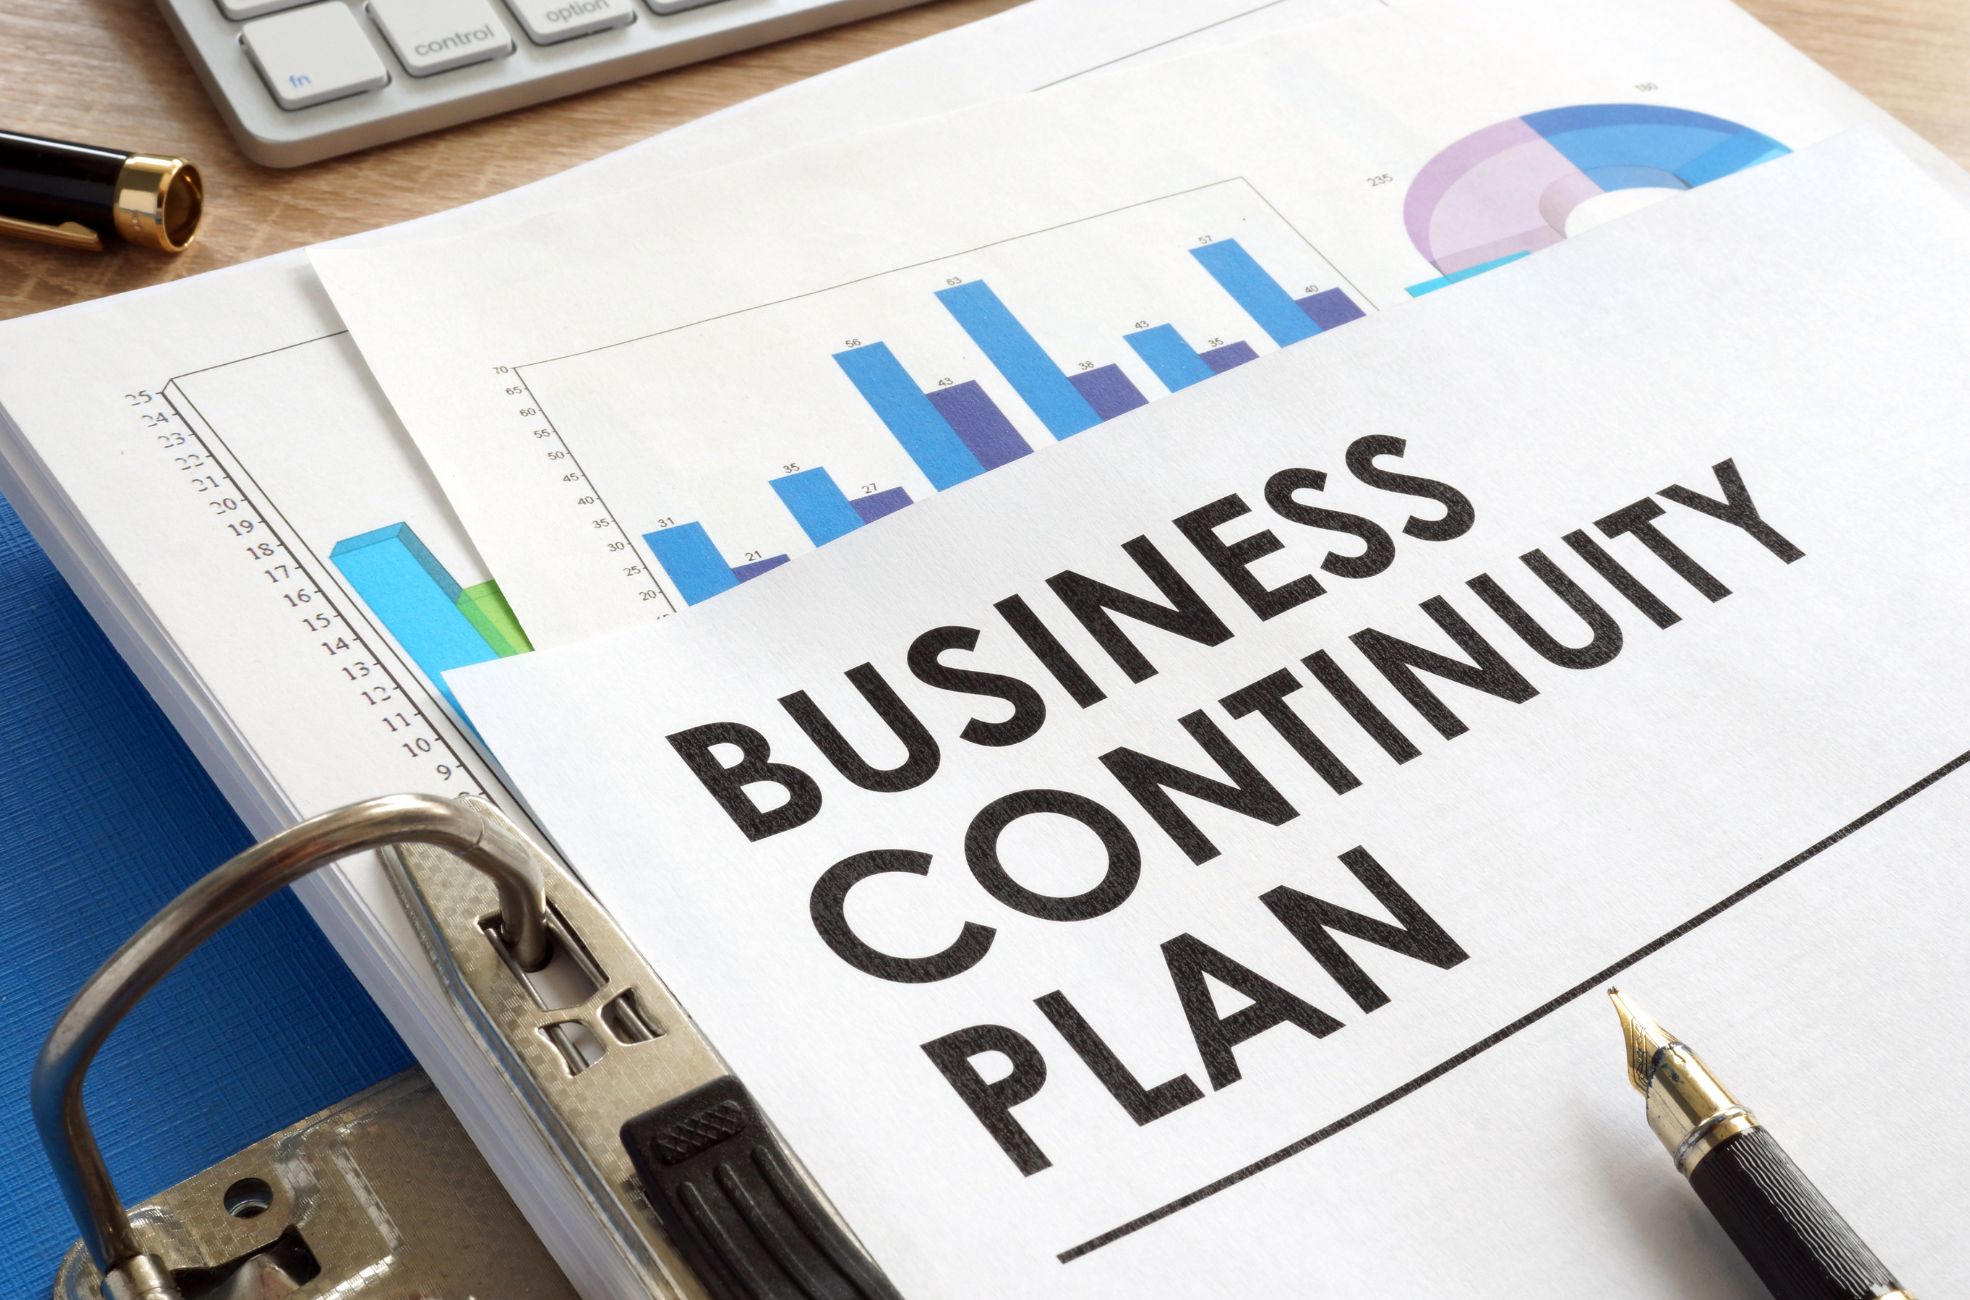 Folder Saying Business Continuity Plan